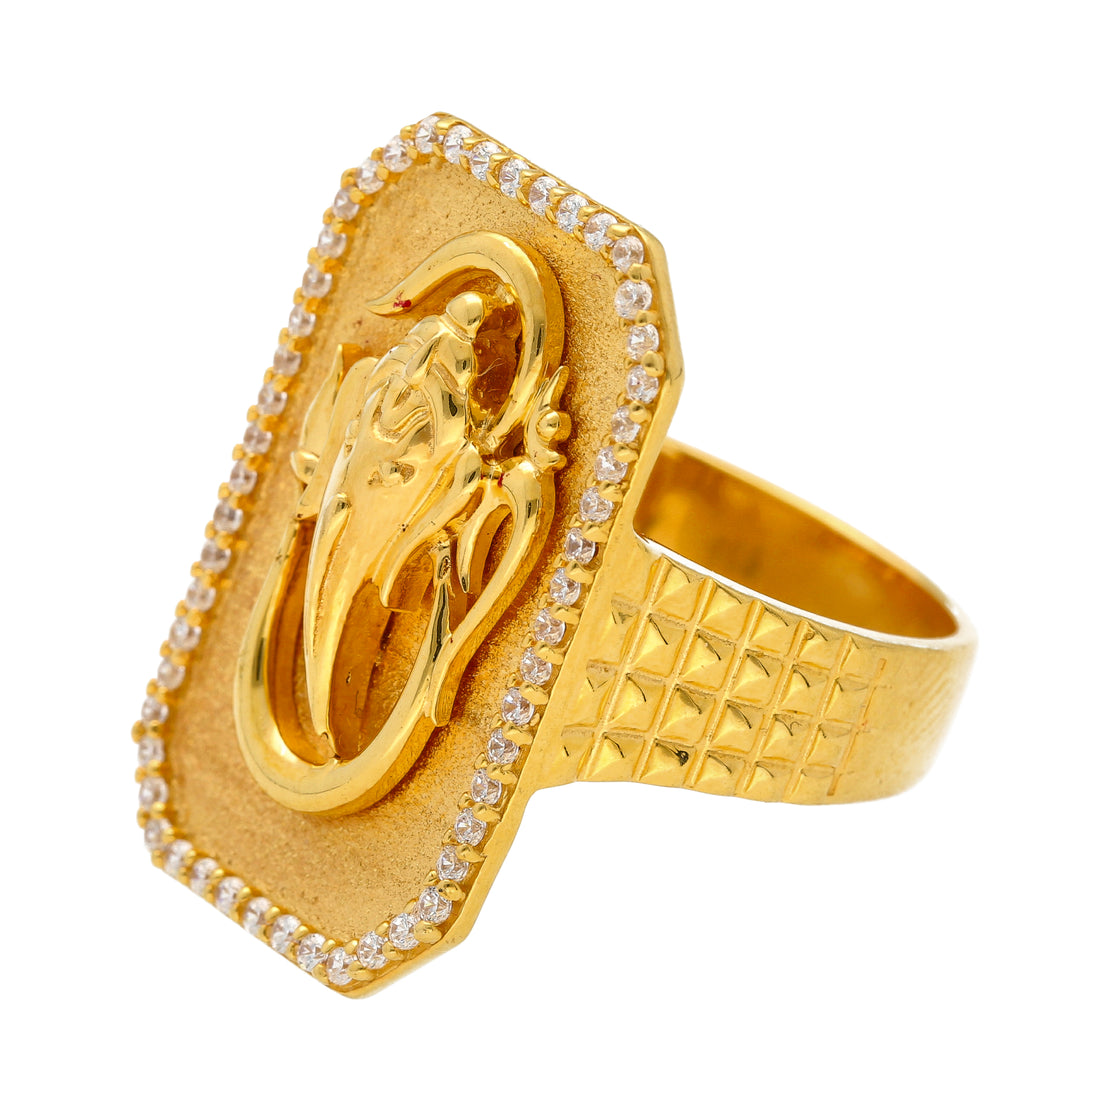 GOLD GENTS RING ITALIAN DESIGN - BENUD BEHARI DUTT